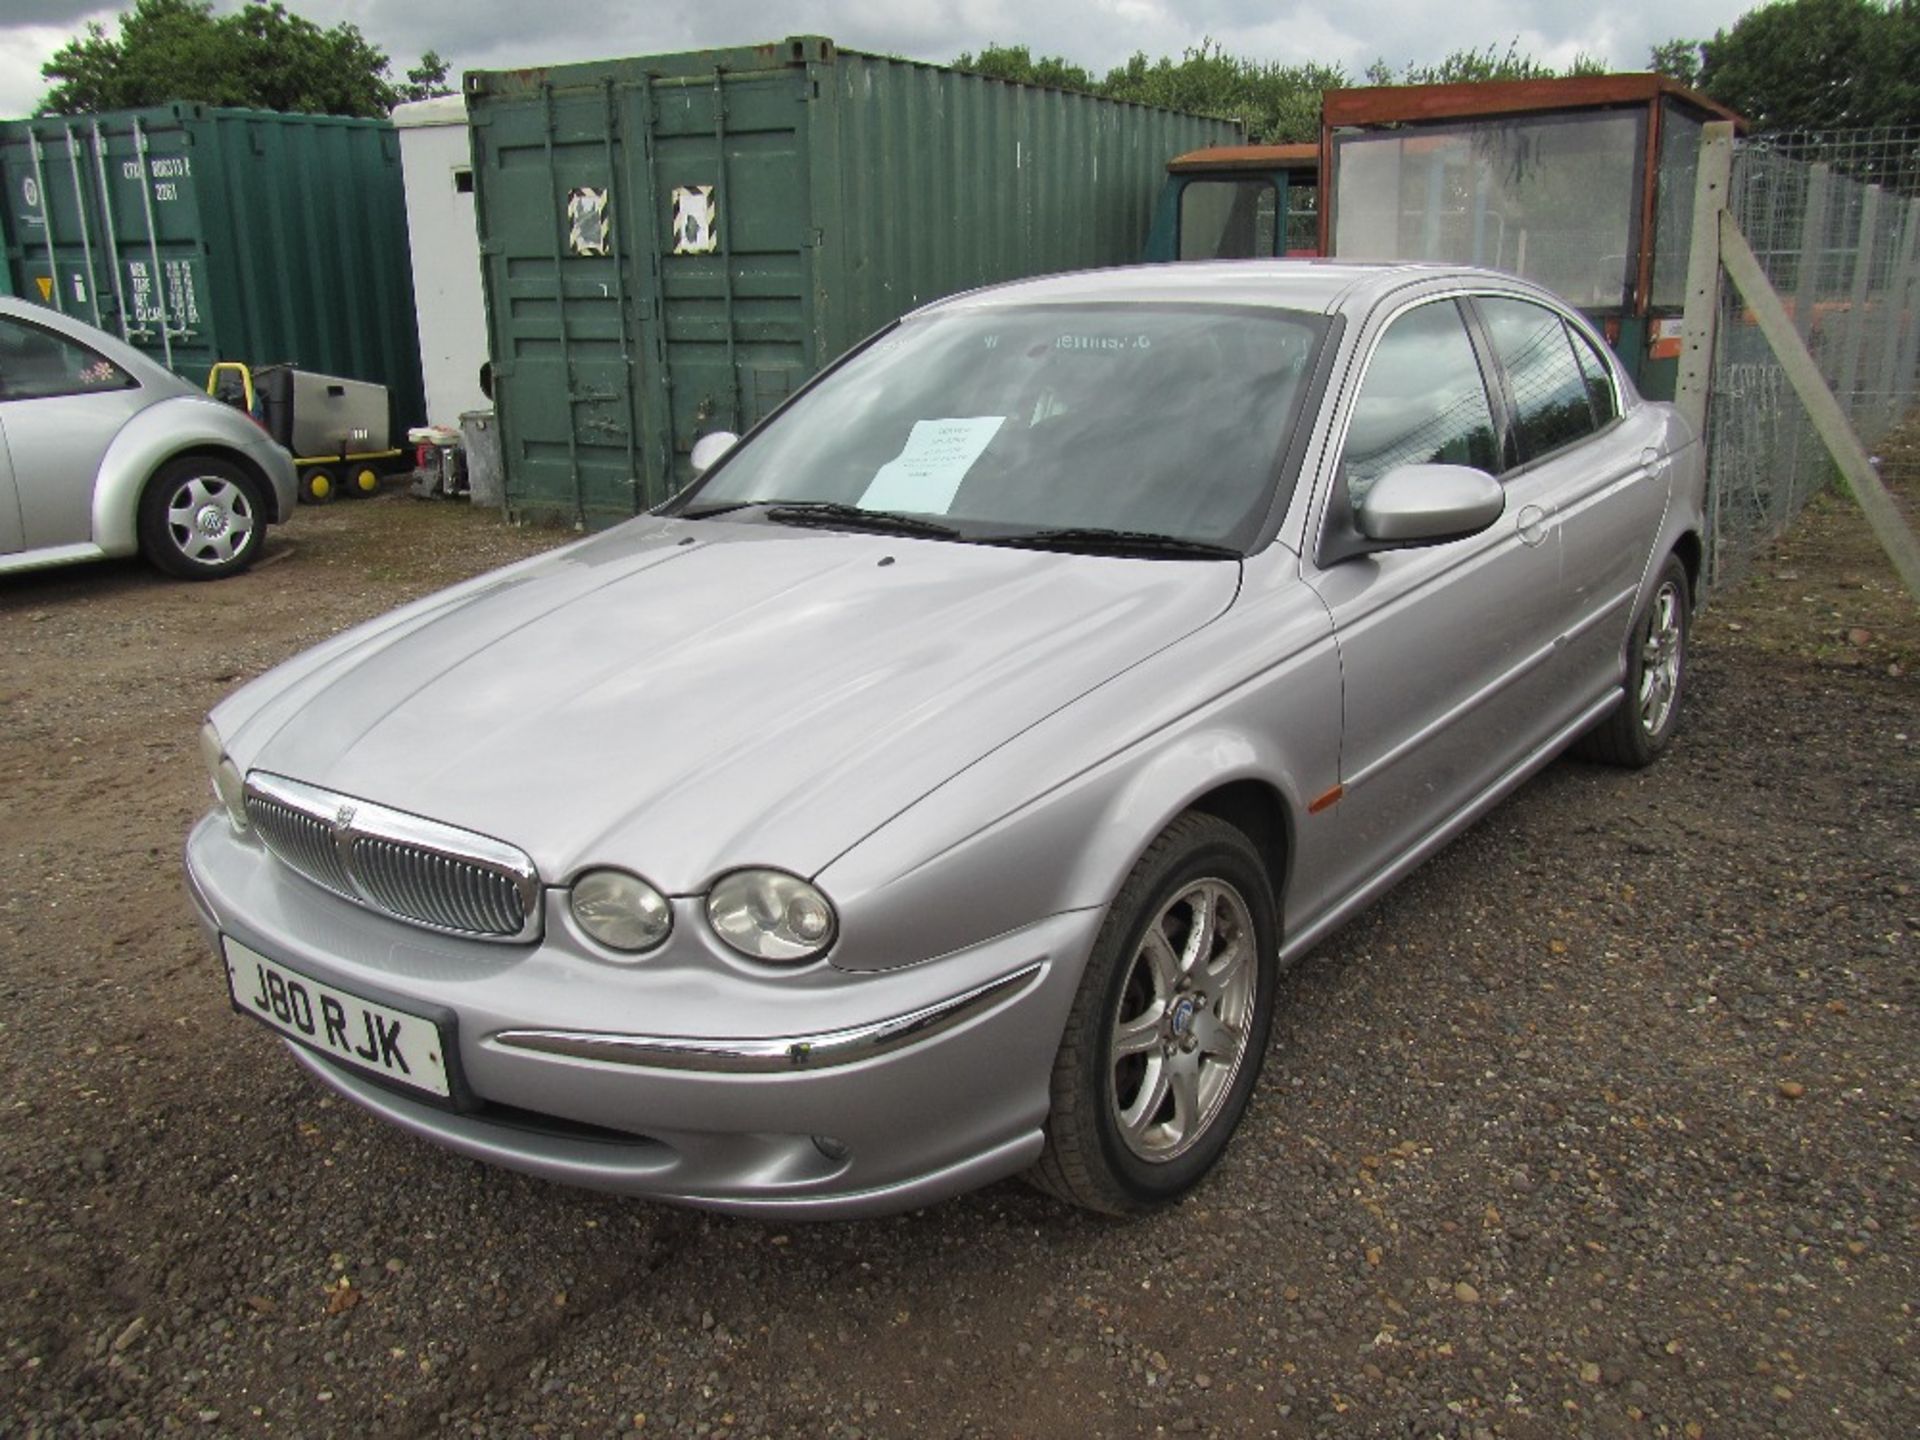 2003 Jaguar X Type, 2.1 Petrol. MOT till 9/6/17. Reg. No. J80 RJK